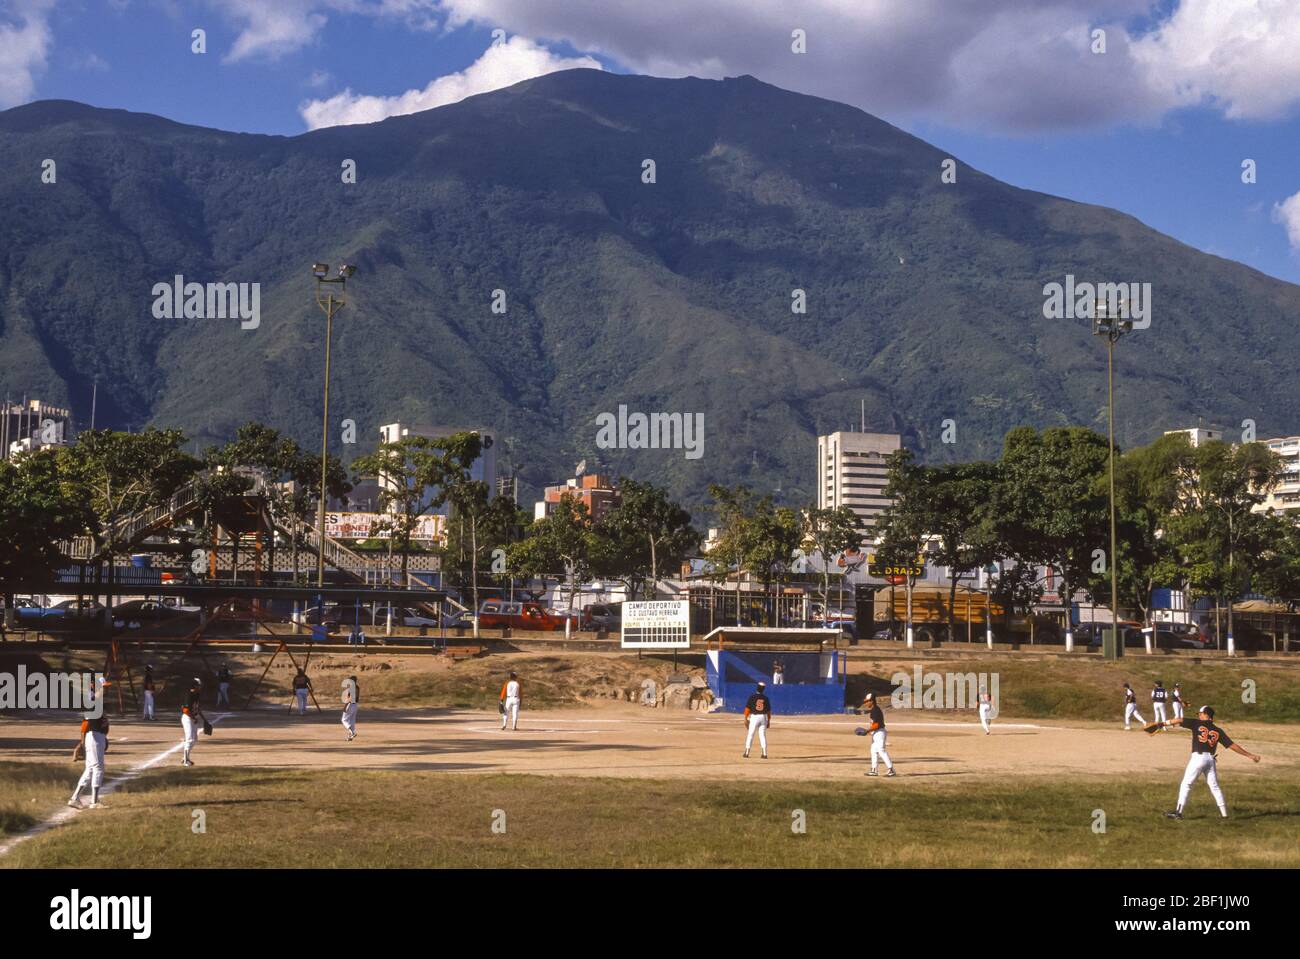 CARACAS, VENEZUELA - pratica di baseball e Avila montagna alle spalle nel 1988. Foto Stock